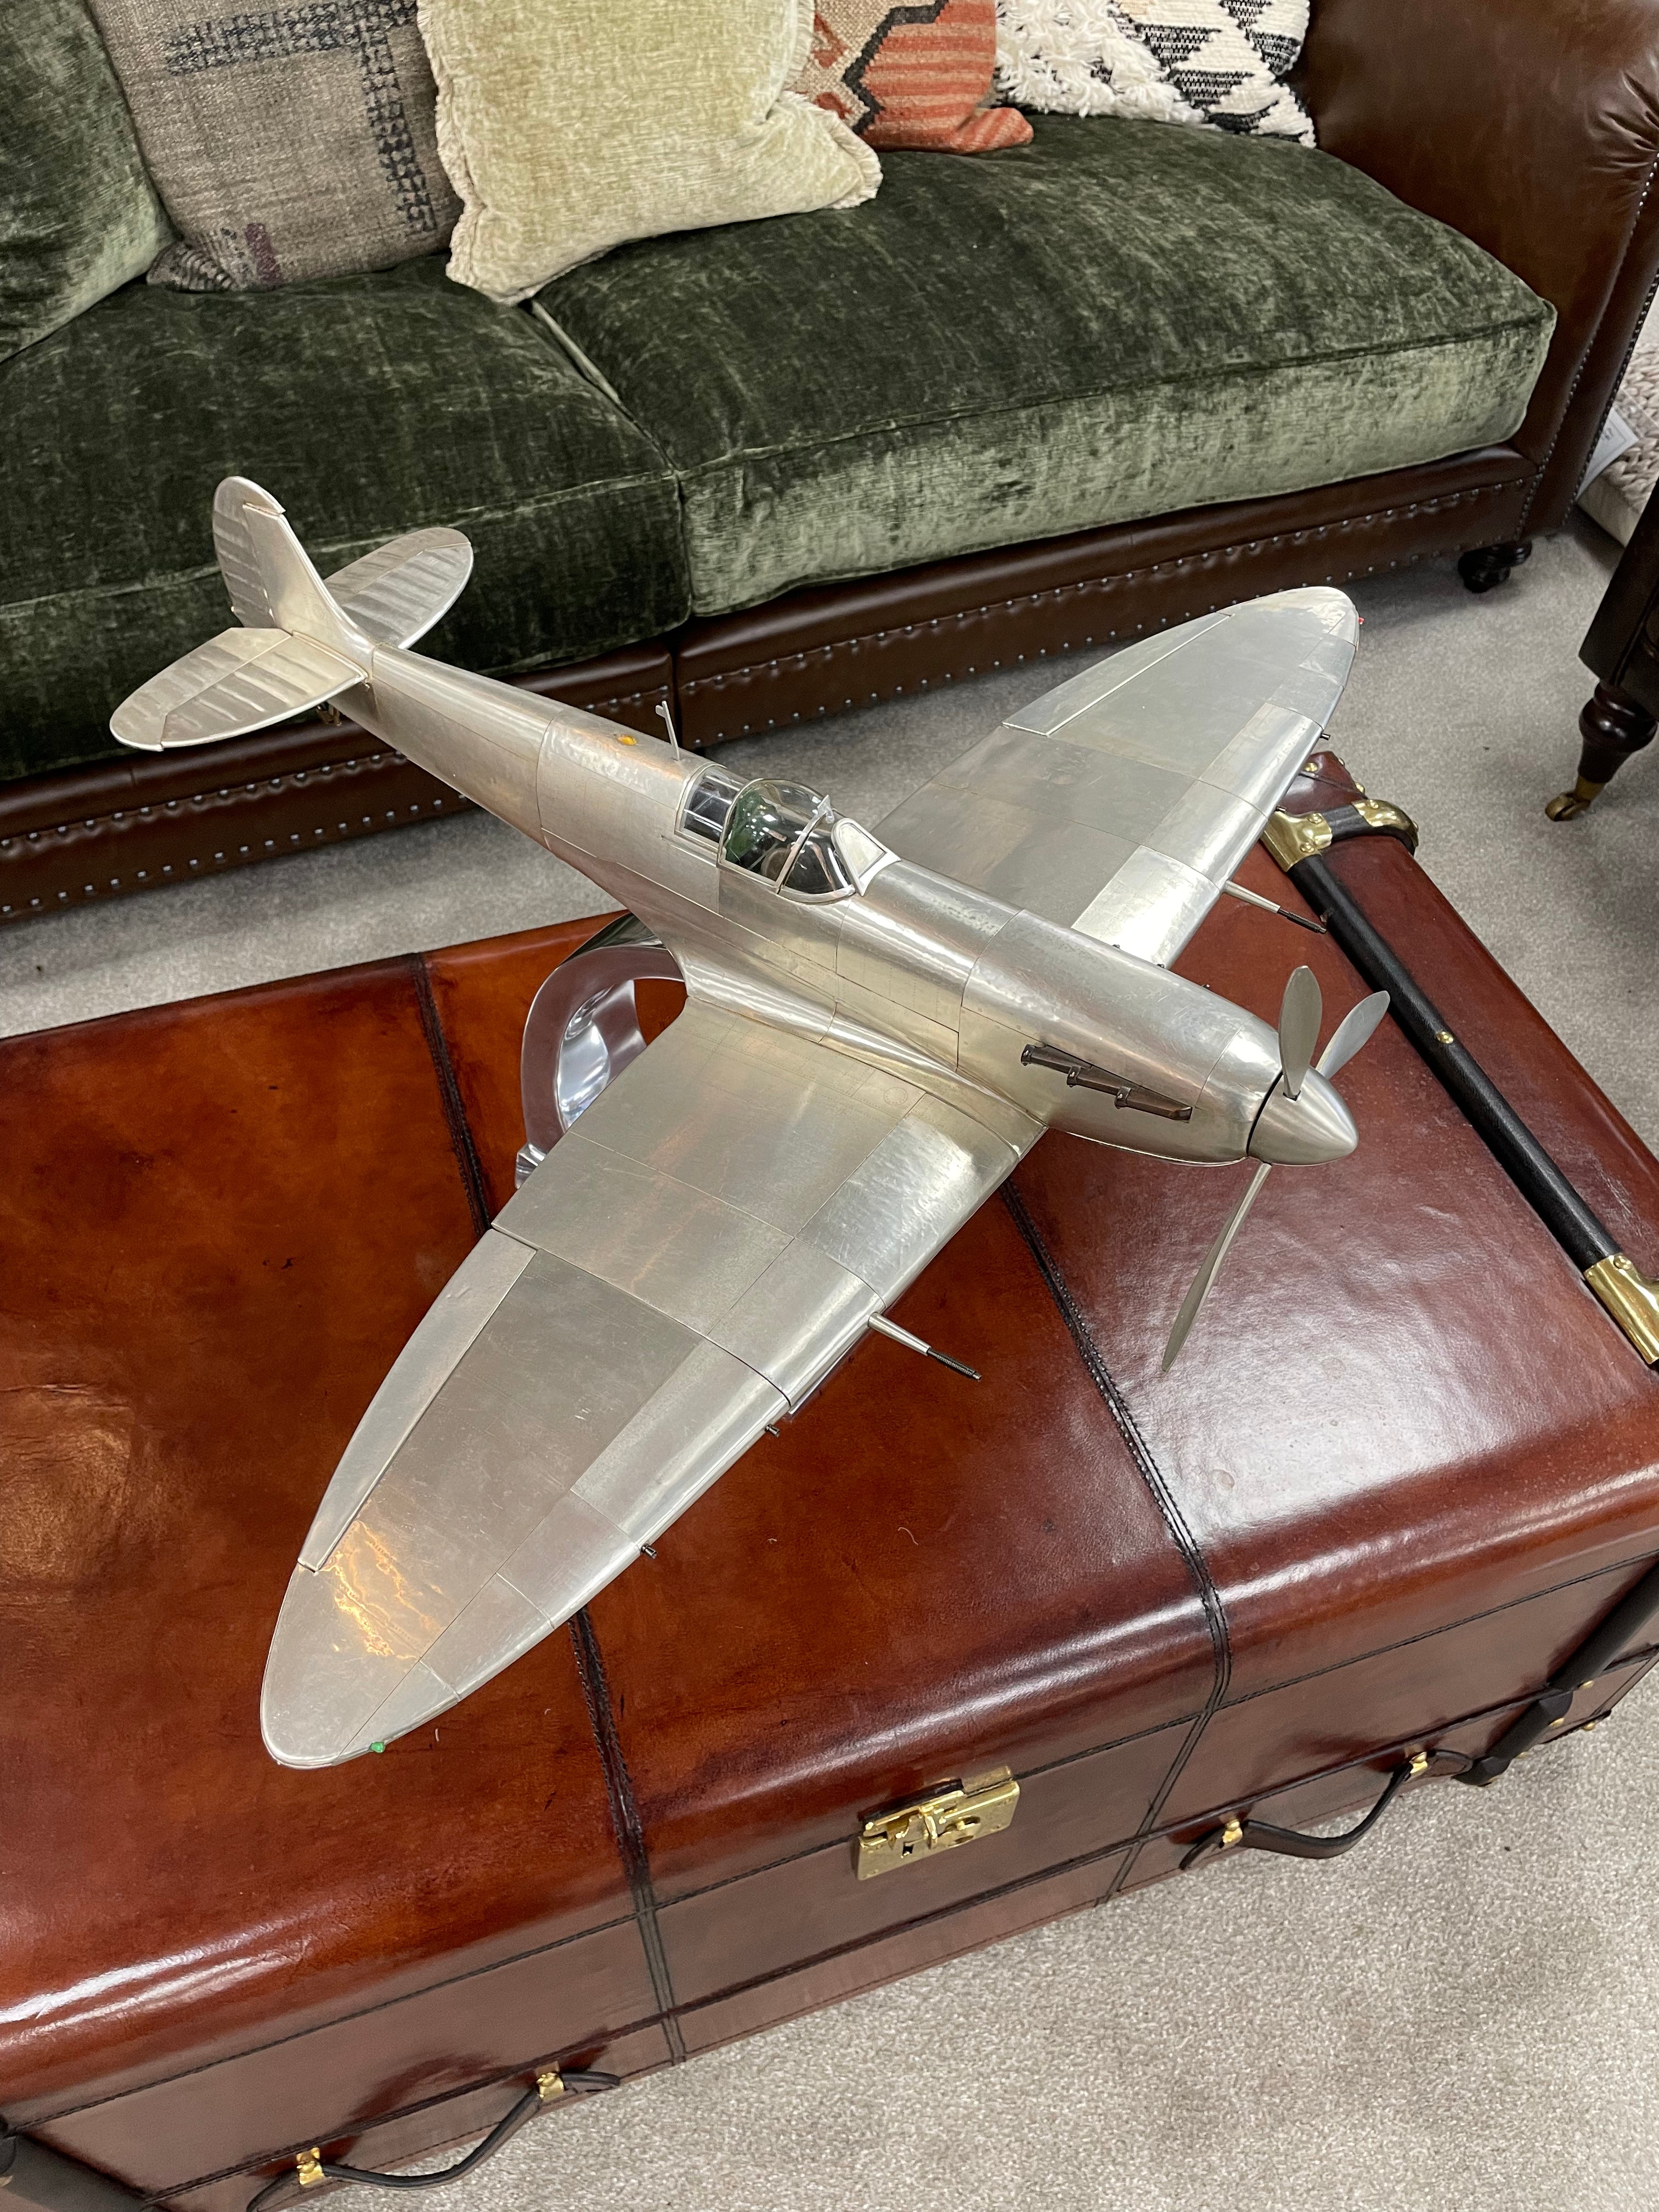 Ex Display Spitfire plane